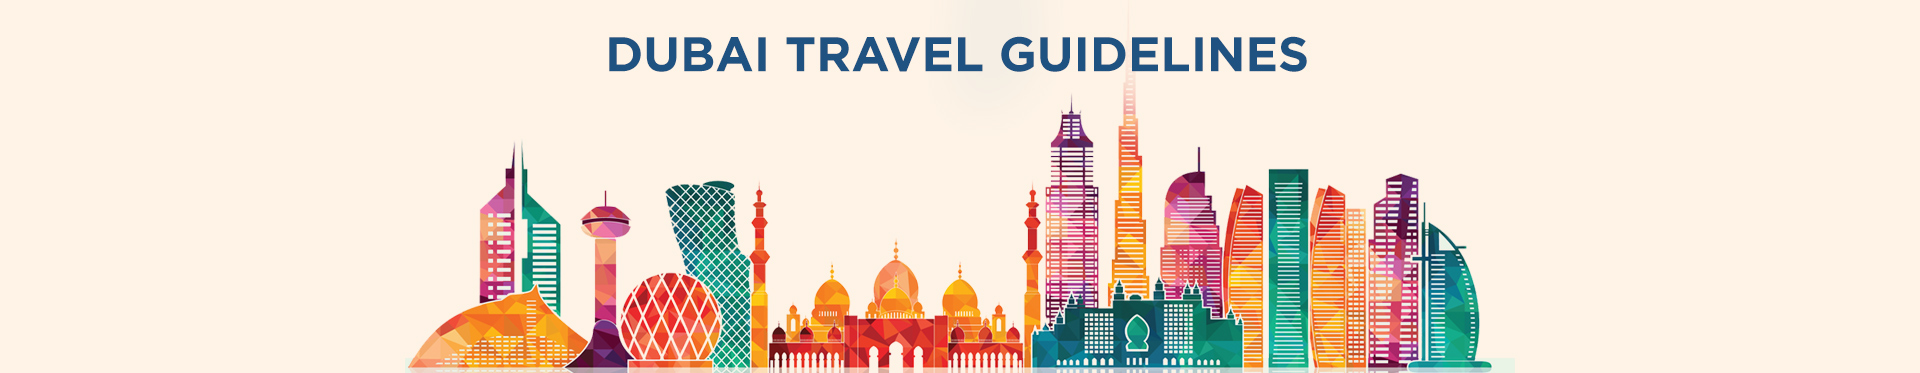 international travel guidelines dubai